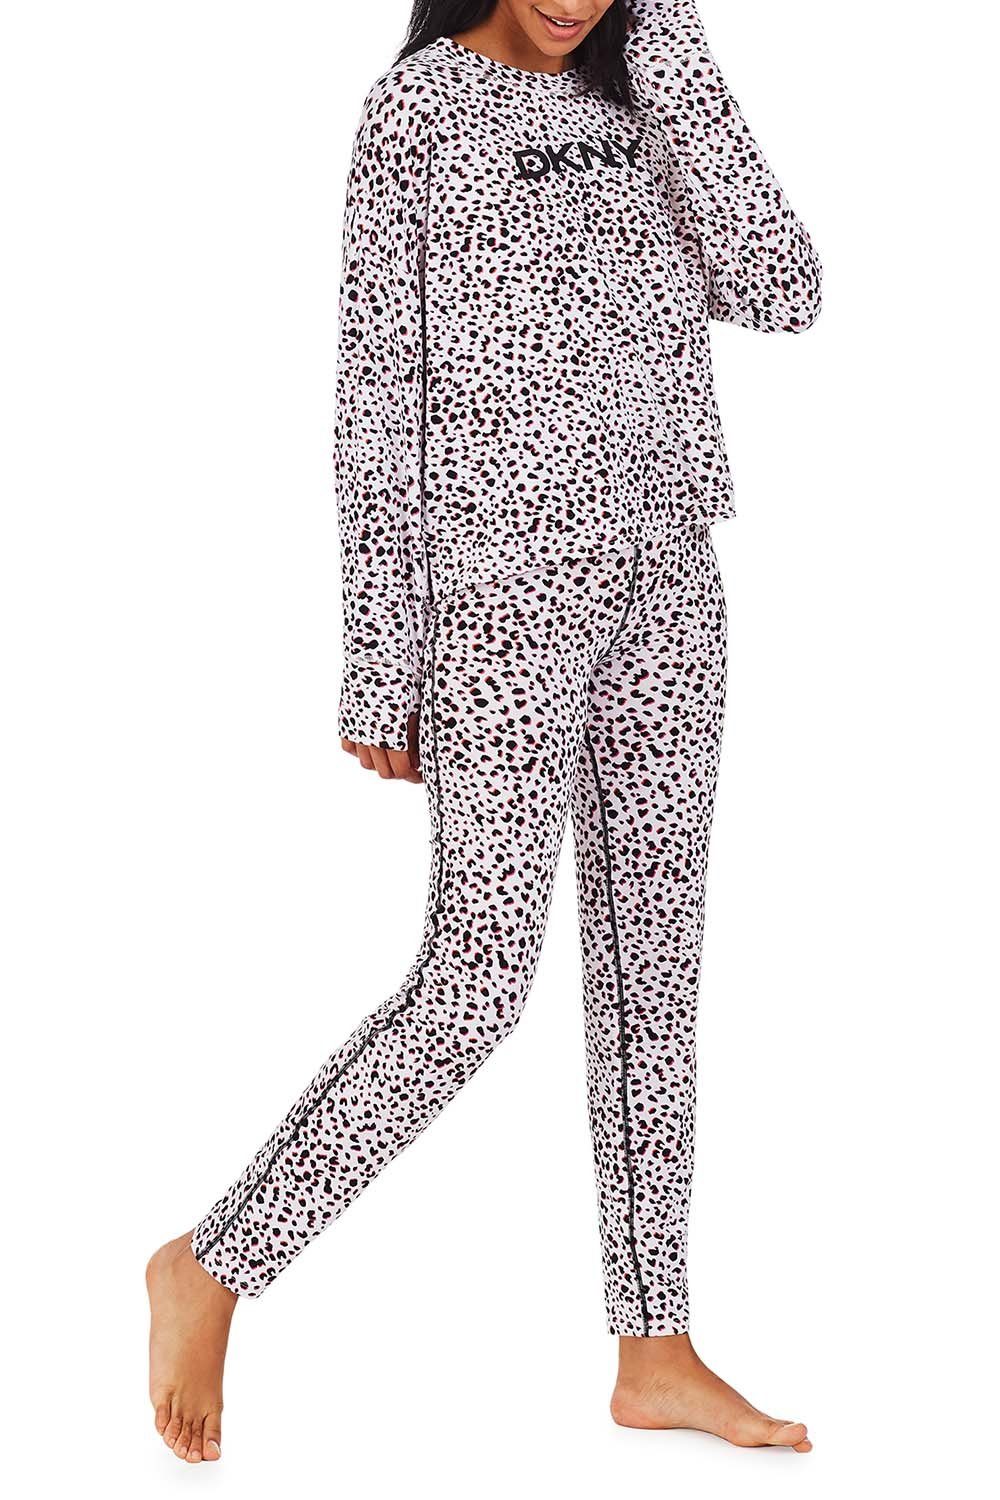 Legging Set Top & Pyjama YI2922523 DKNY